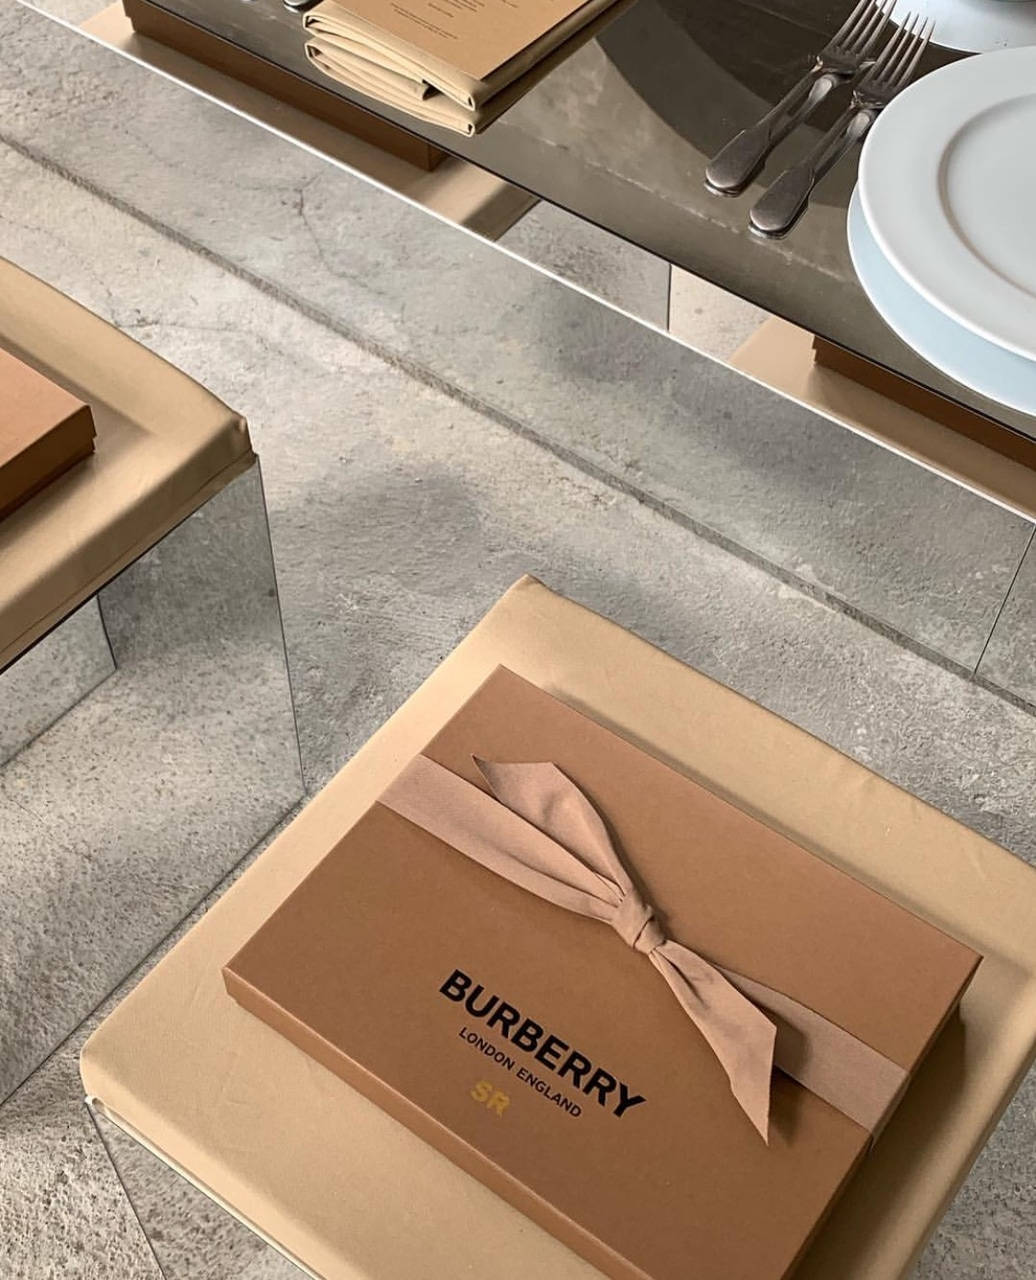 Burberry Gift Box